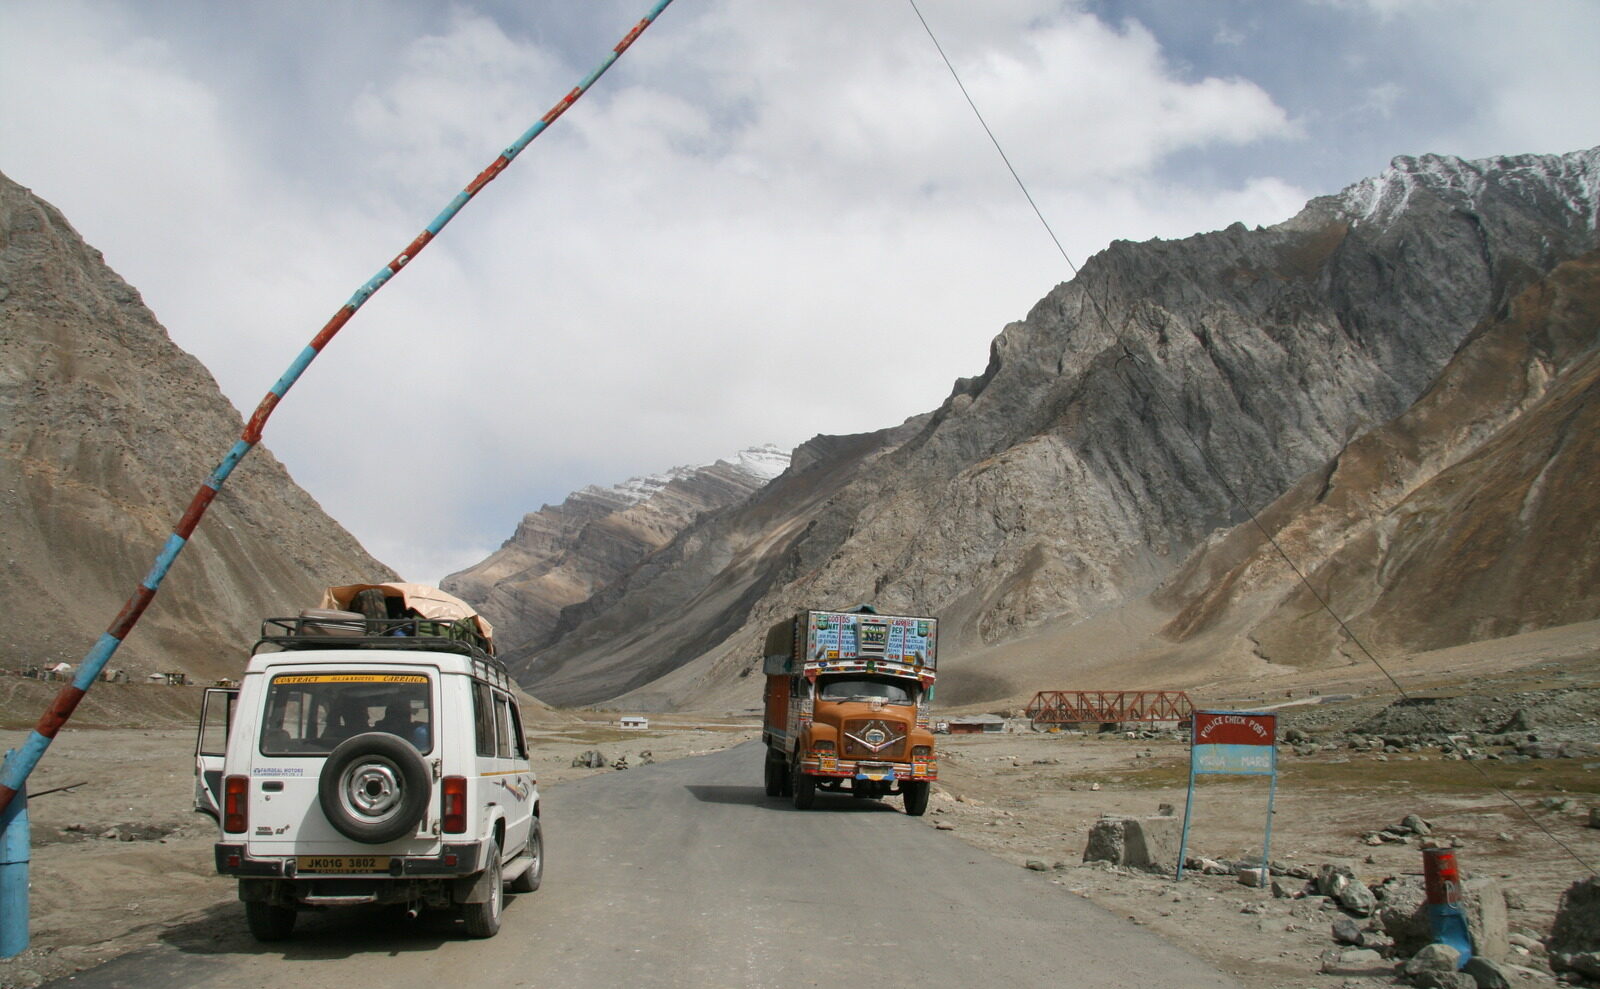 Kargil to Leh city in Ladakh in the remote Himalayas